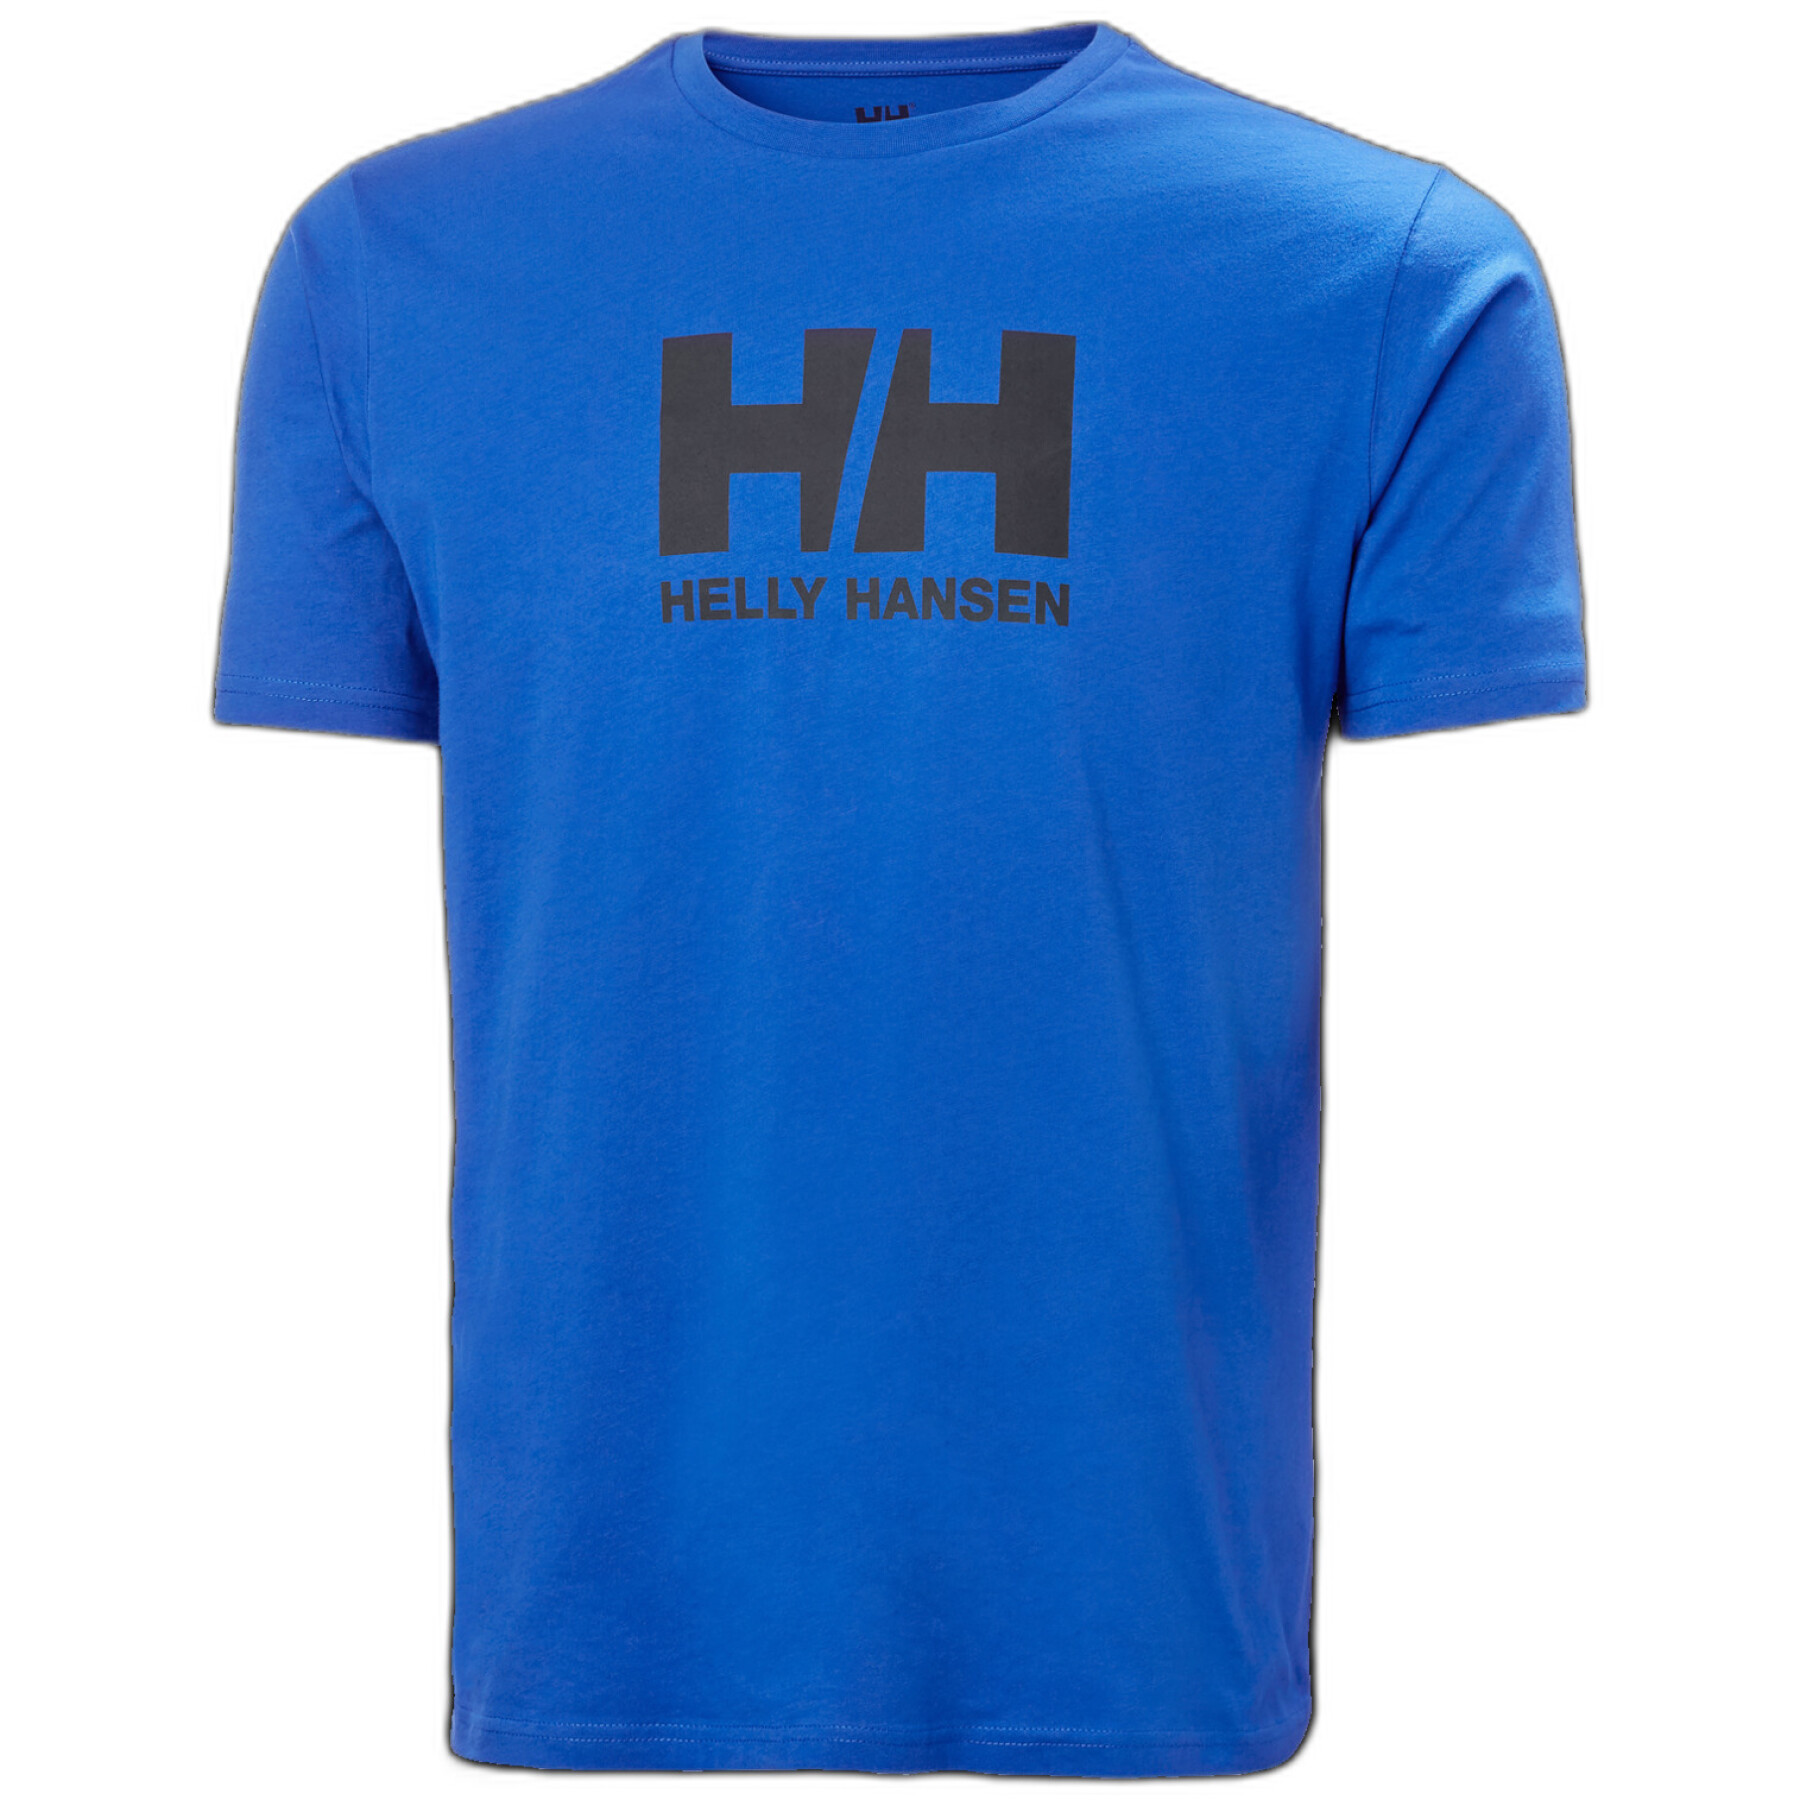 Camiseta Helly Hansen